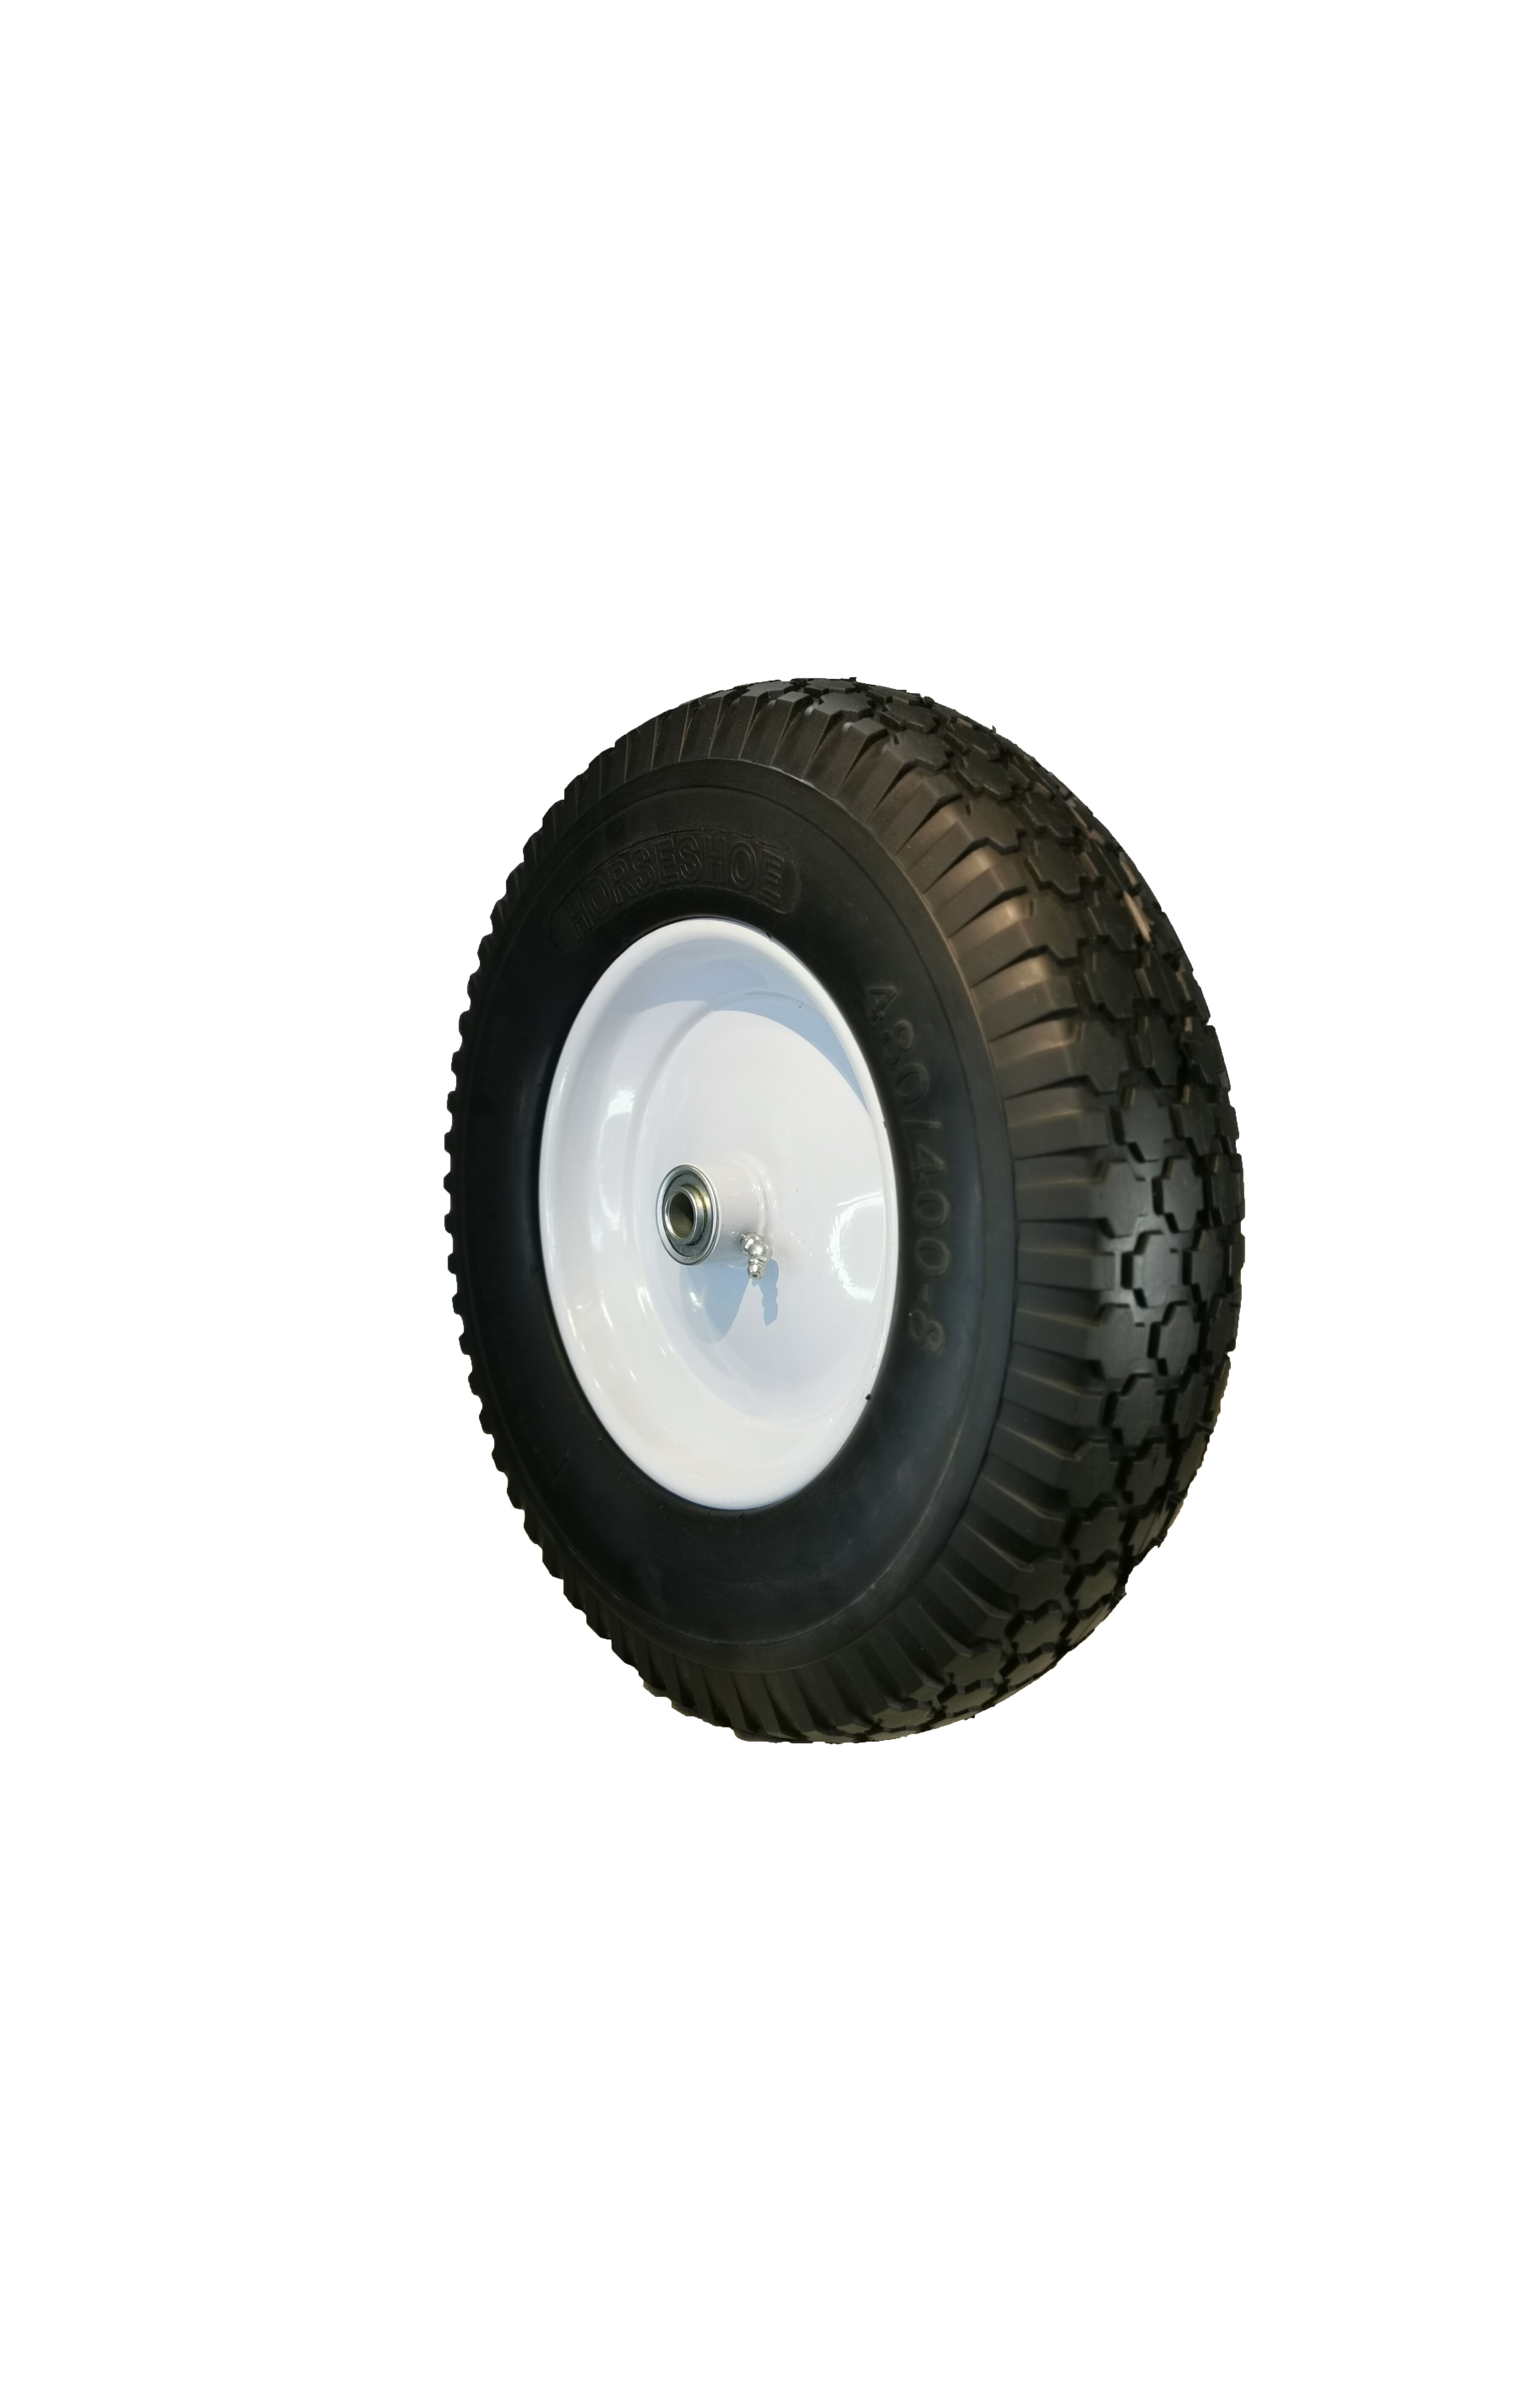 N7 Two Cross 4.80/4.00-8 Flat Free Wheelbarrow/Cart Universal 16 Tires w/Steel Rim Packed in Carton 5/8 & 3/4 Bore T167 